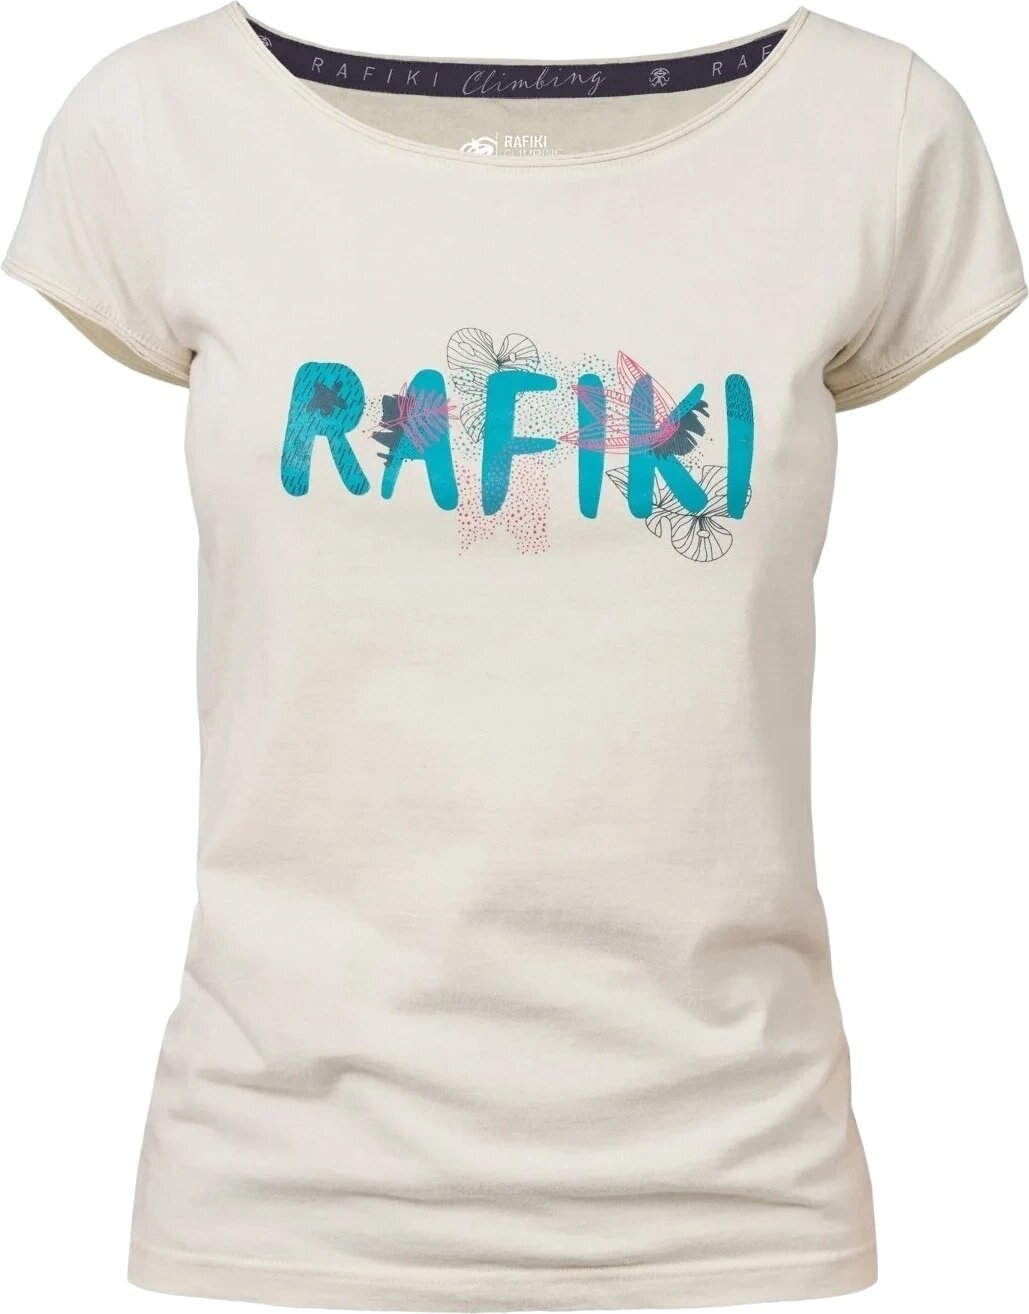 Tricou Rafiki Jay Lady T-Shirt Short Sleeve Light Gray 40 Tricou